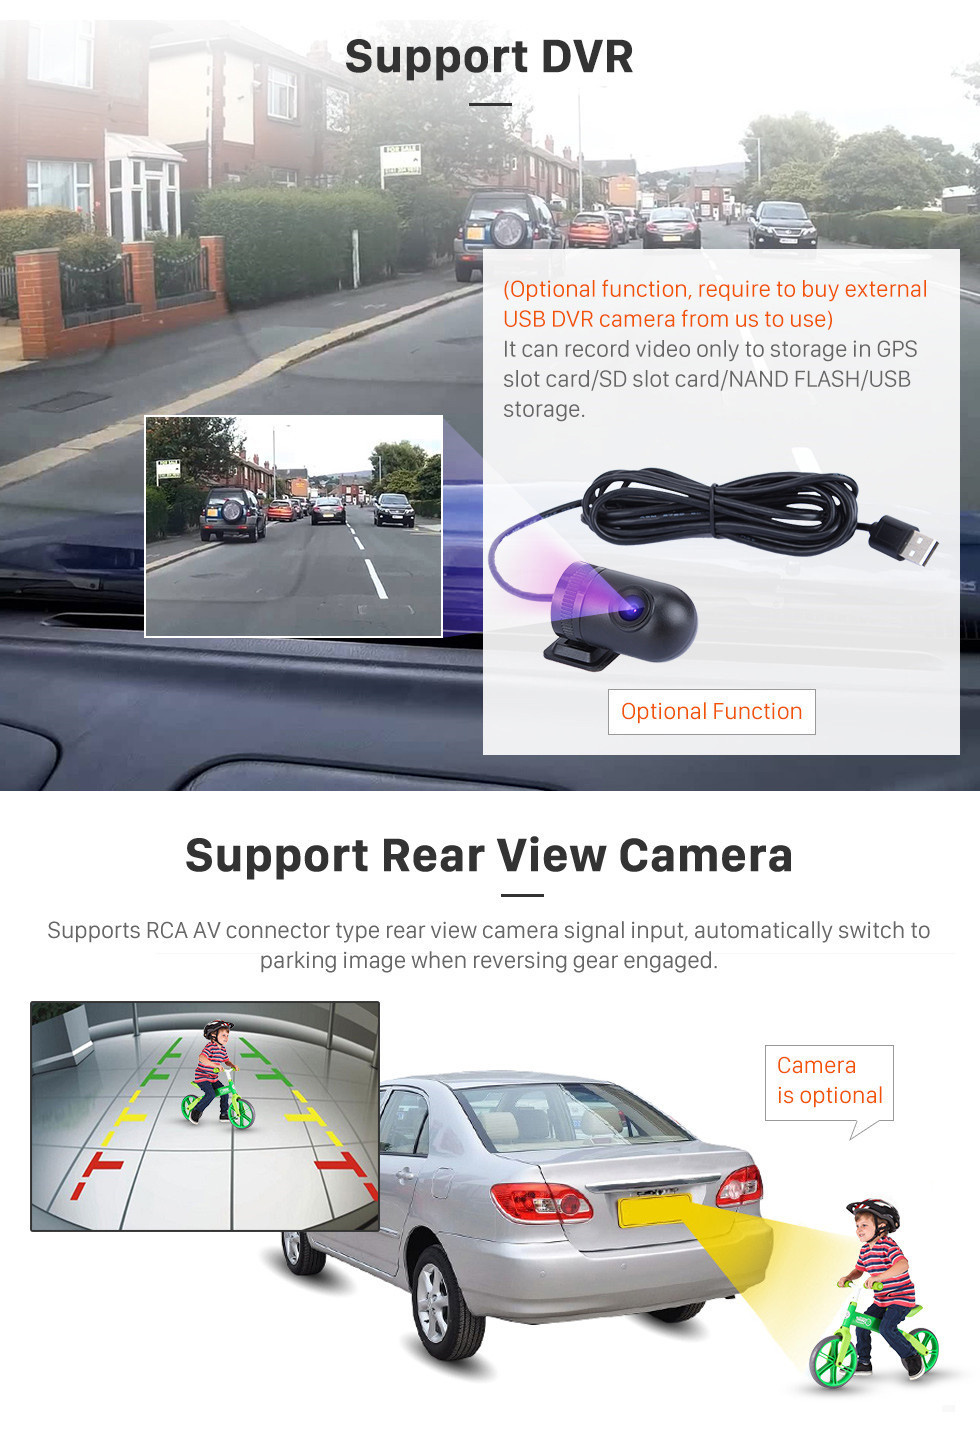 Seicane 2015-2018 chevy Chevrolet Cruze Android 12.0 9 pulgadas Navegación GPS Radio Bluetooth HD Pantalla táctil WIFI USB Compatible con Carplay TV digital